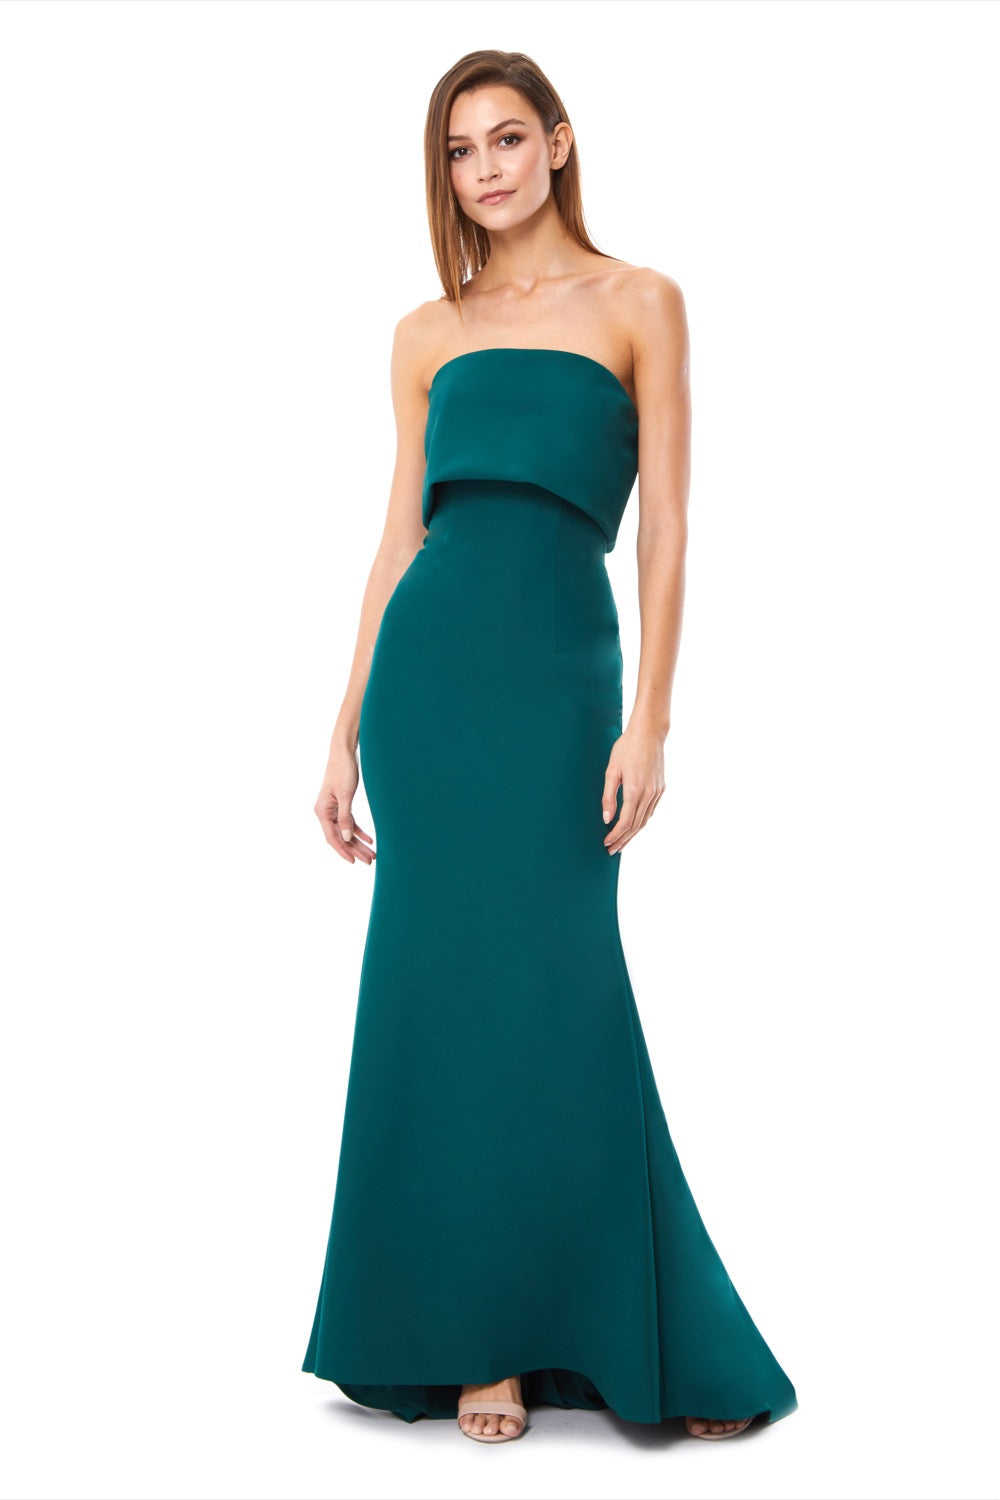 Blaze Strapless Maxi Dress With Overlay, UK 8 / US 4 / EU 36 / Dark Green